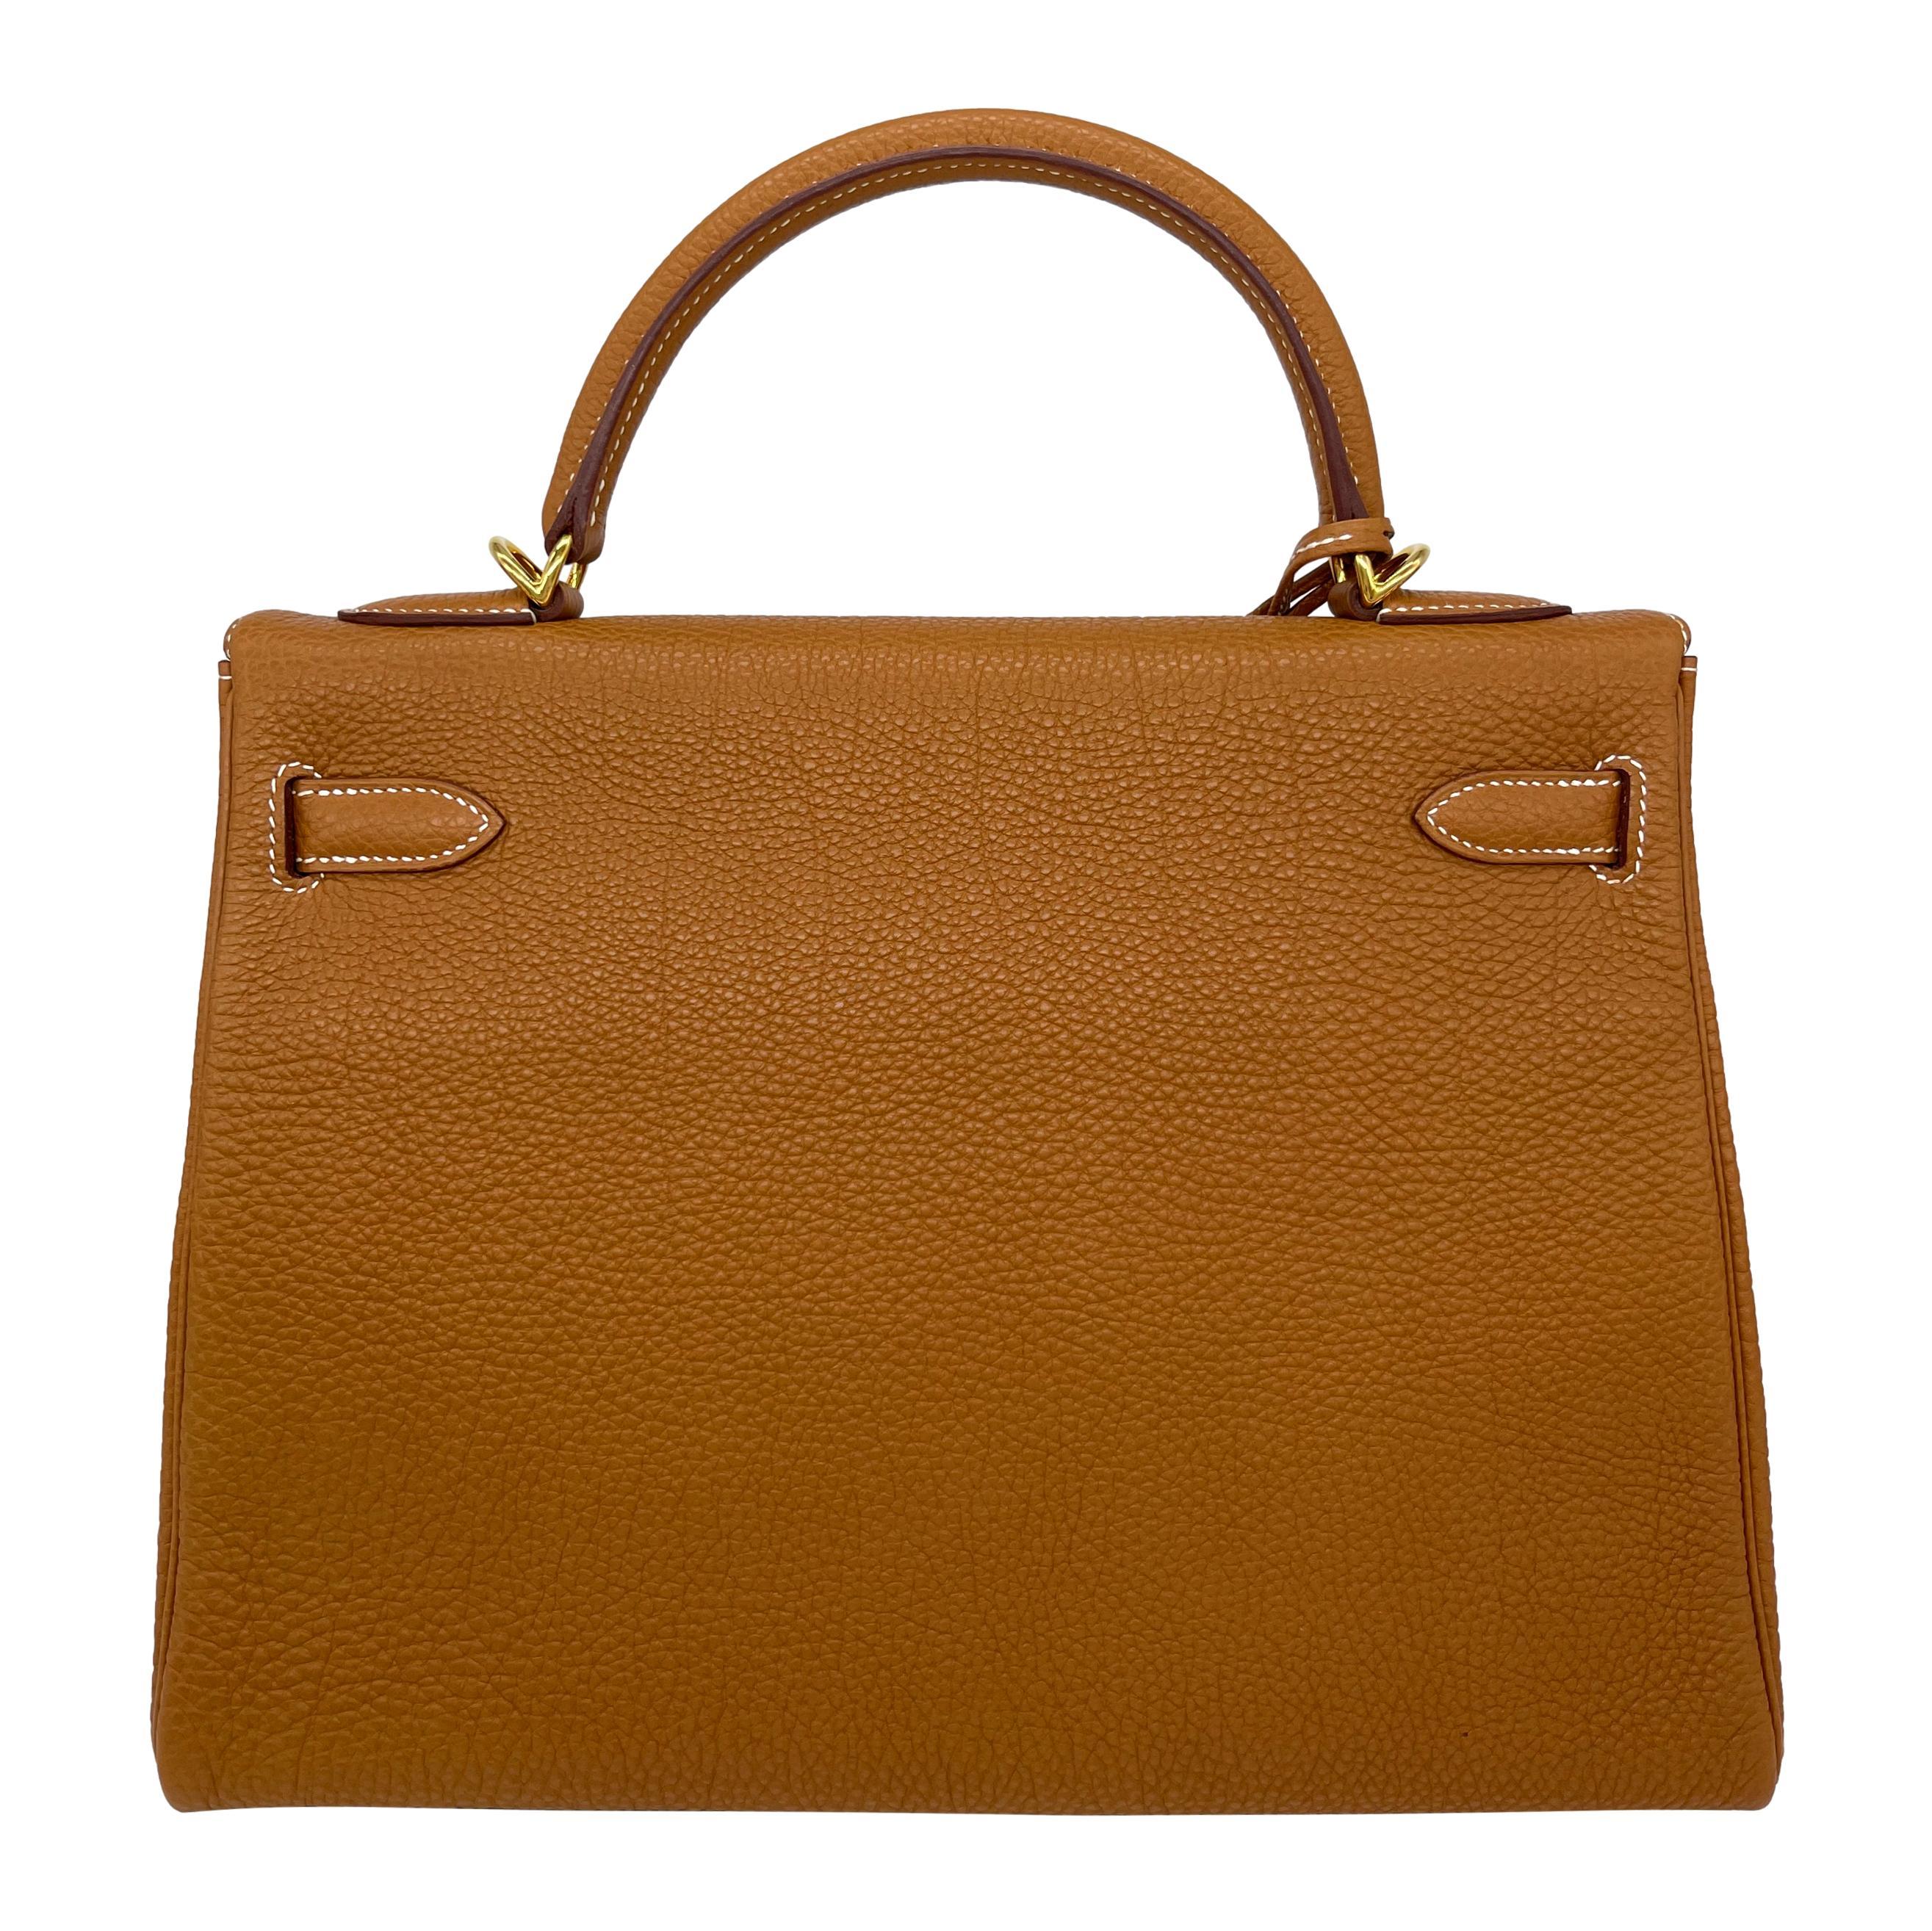 Brown Hermès Natural Clemence Retourne Kelly Handbag with Gold Hardware 32cm, 2007.